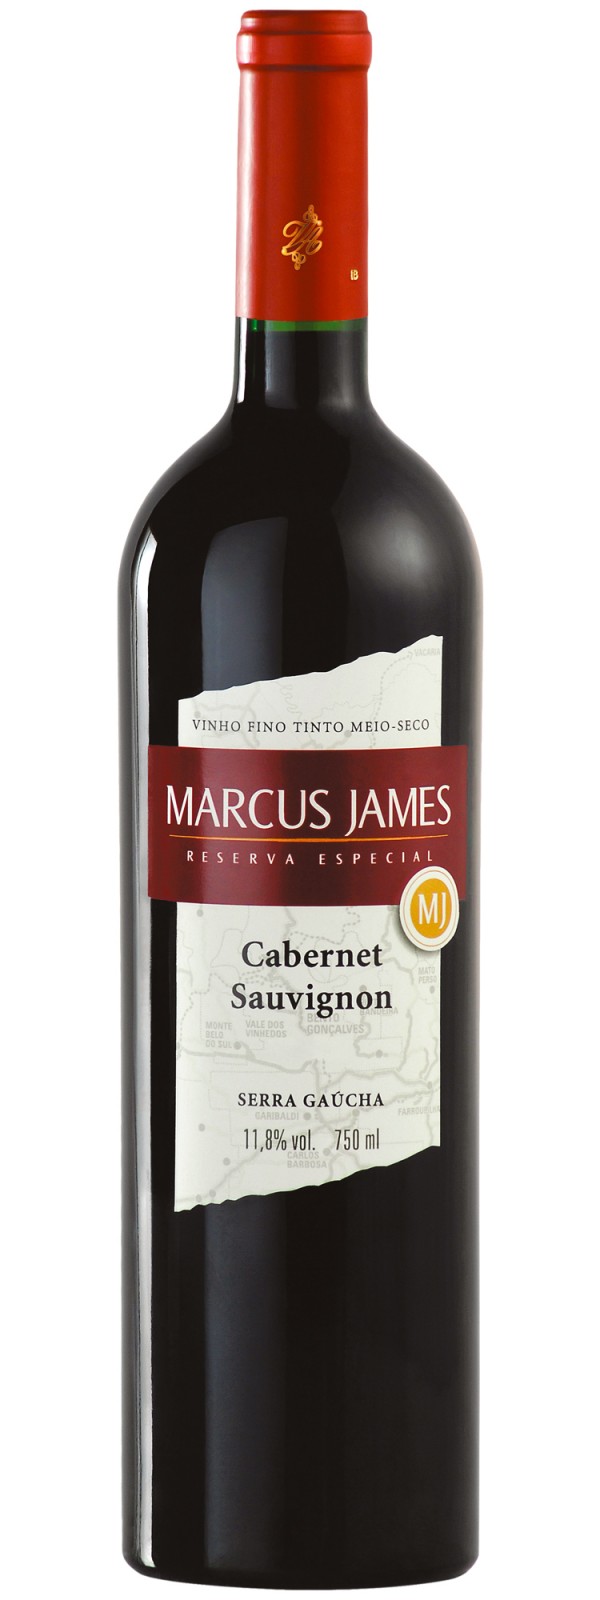 Vinho Marcus James tinto cabernet sauvignon 750 ml